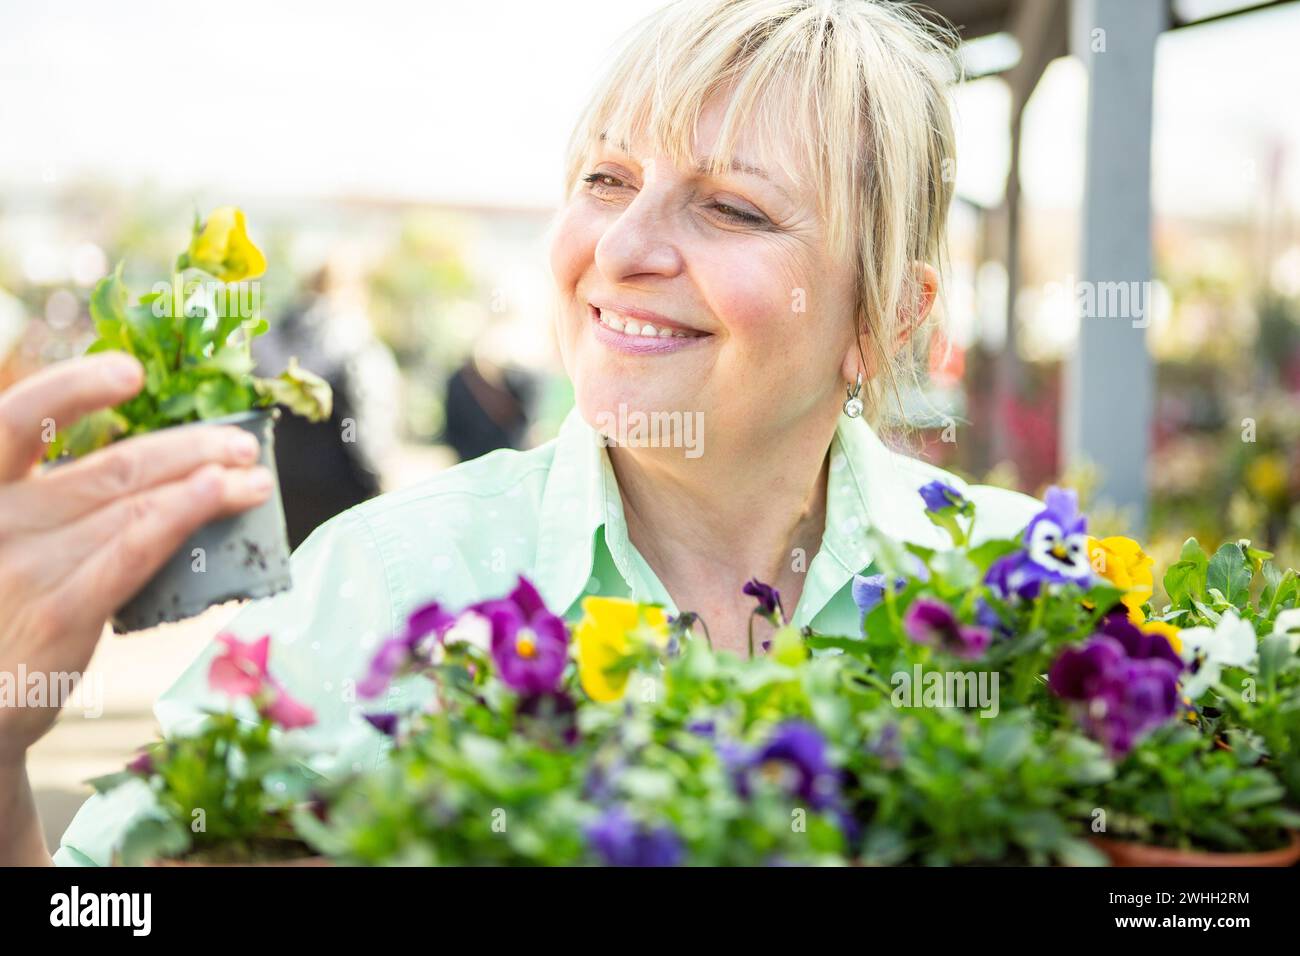 Gardener with flower pots violets Stock Photo